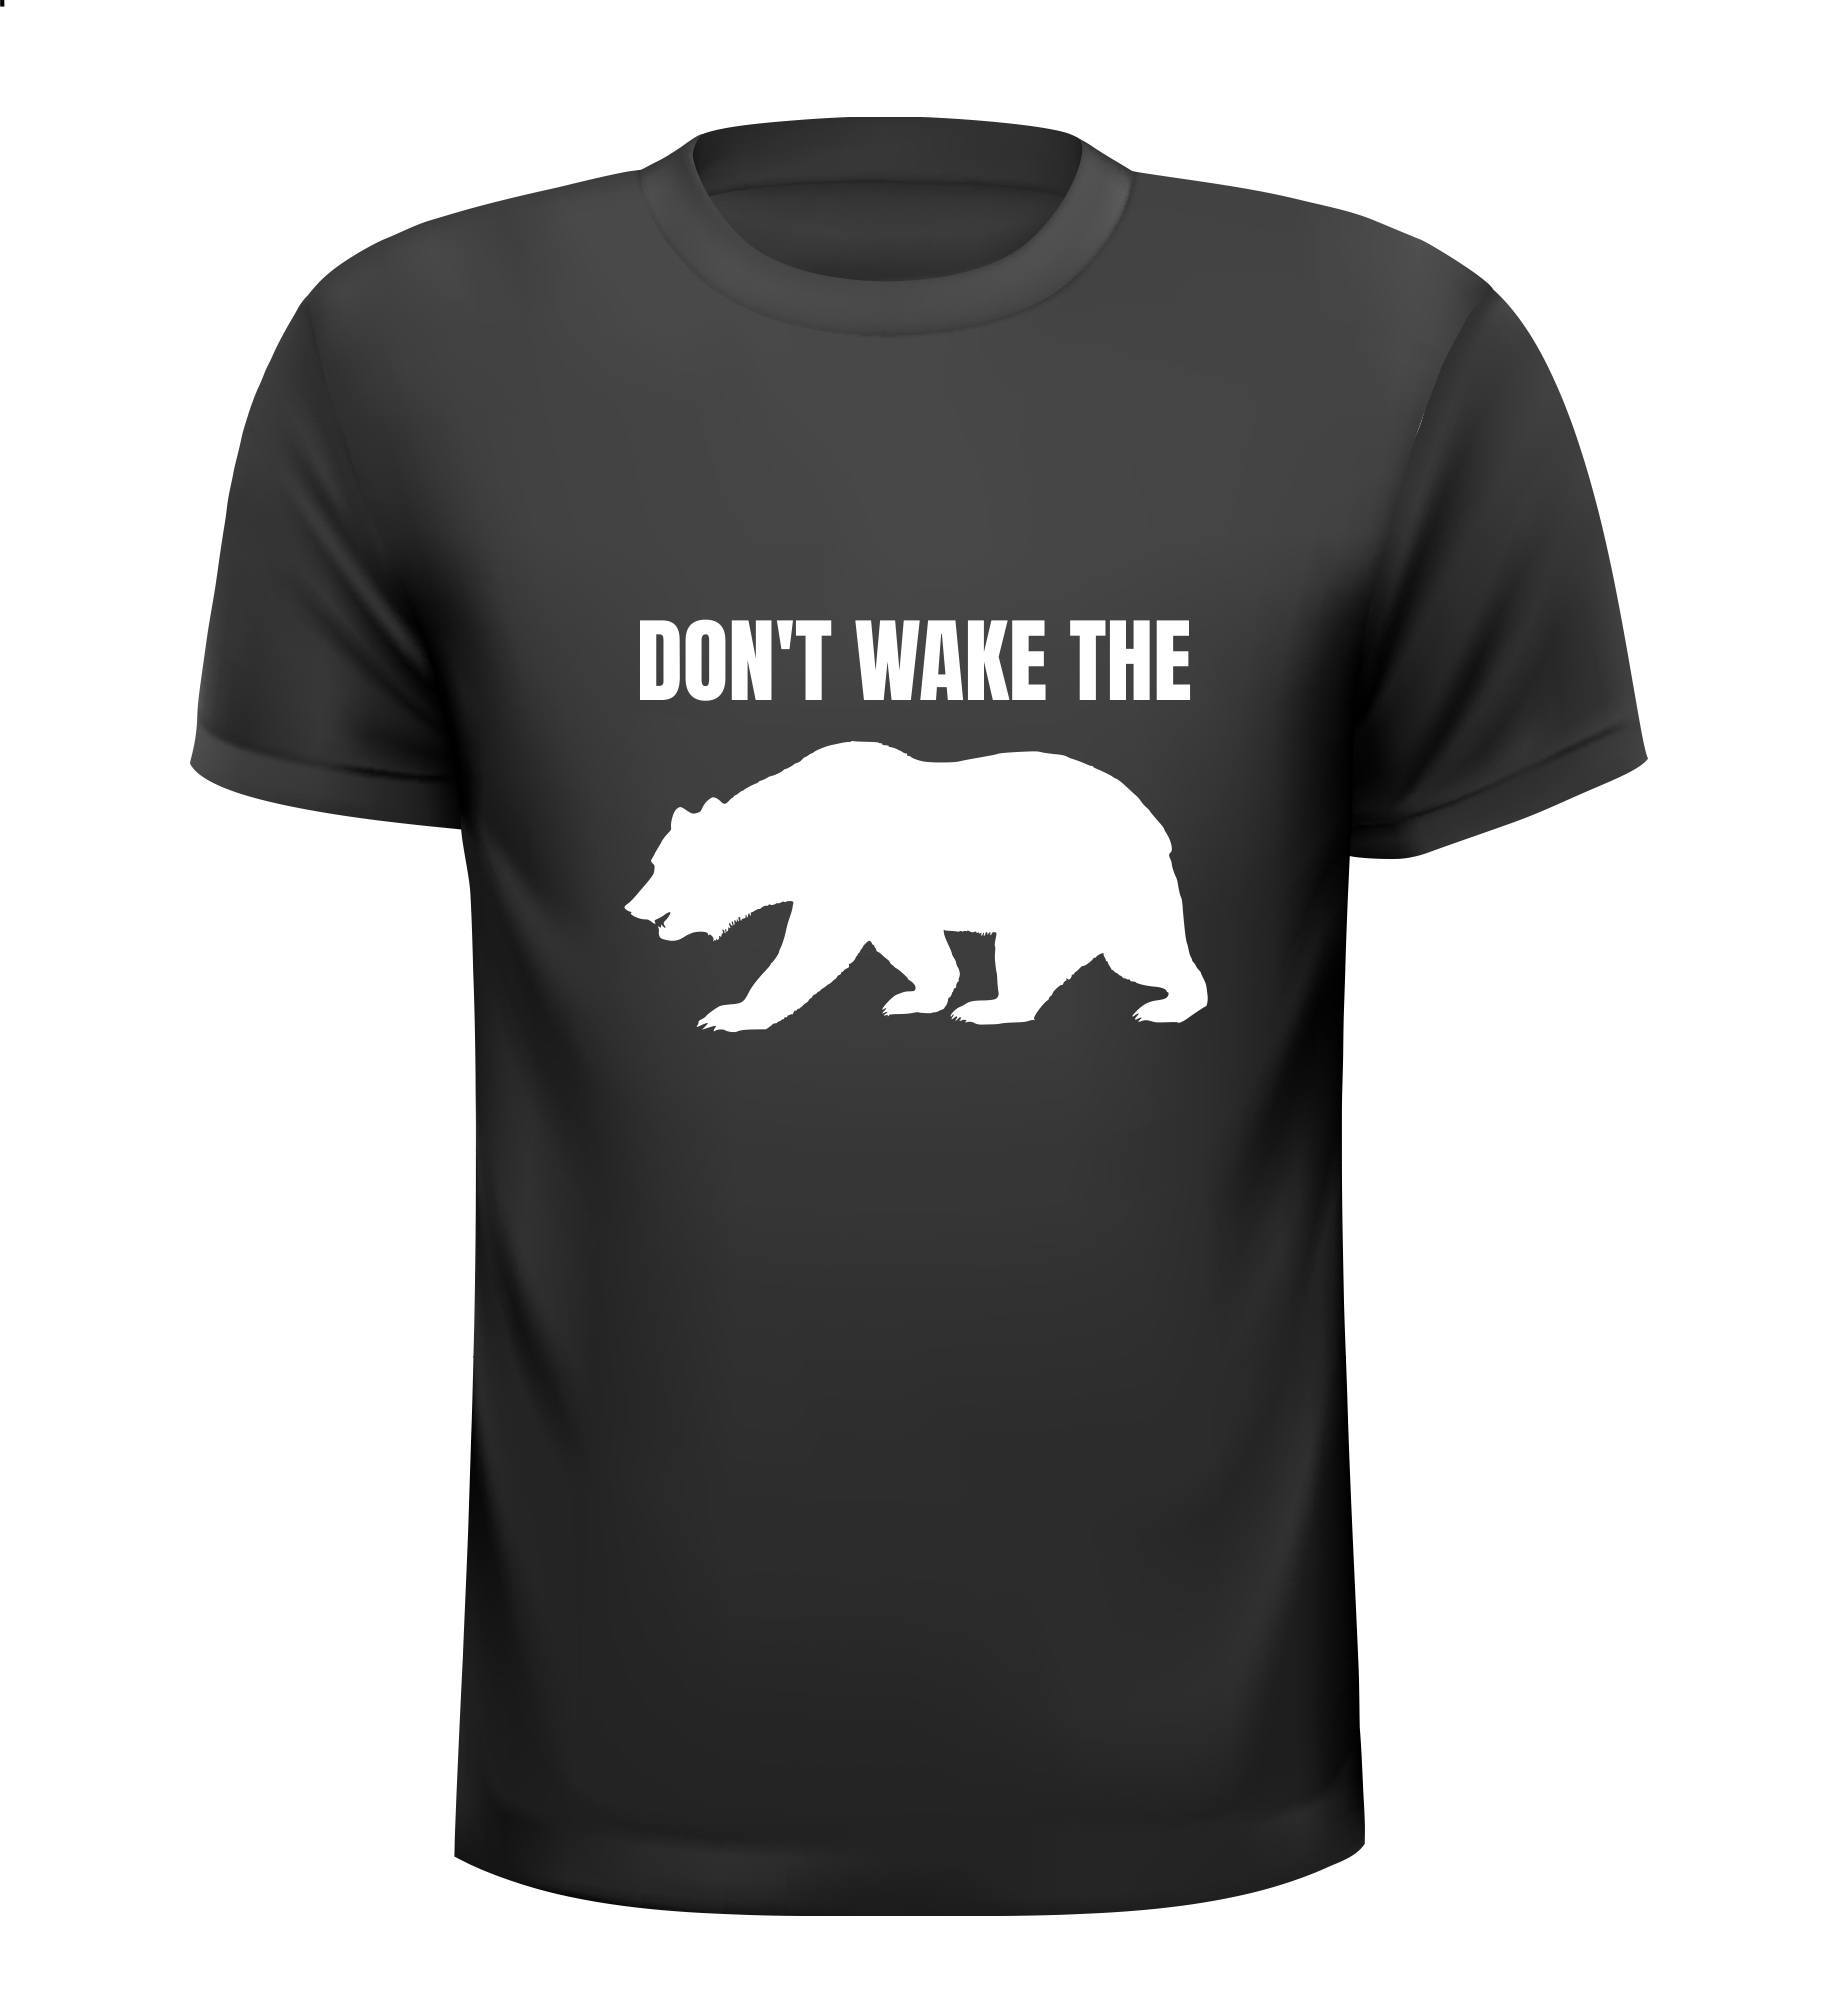 T-shirt don't wake the bear maak de beer niet wakker